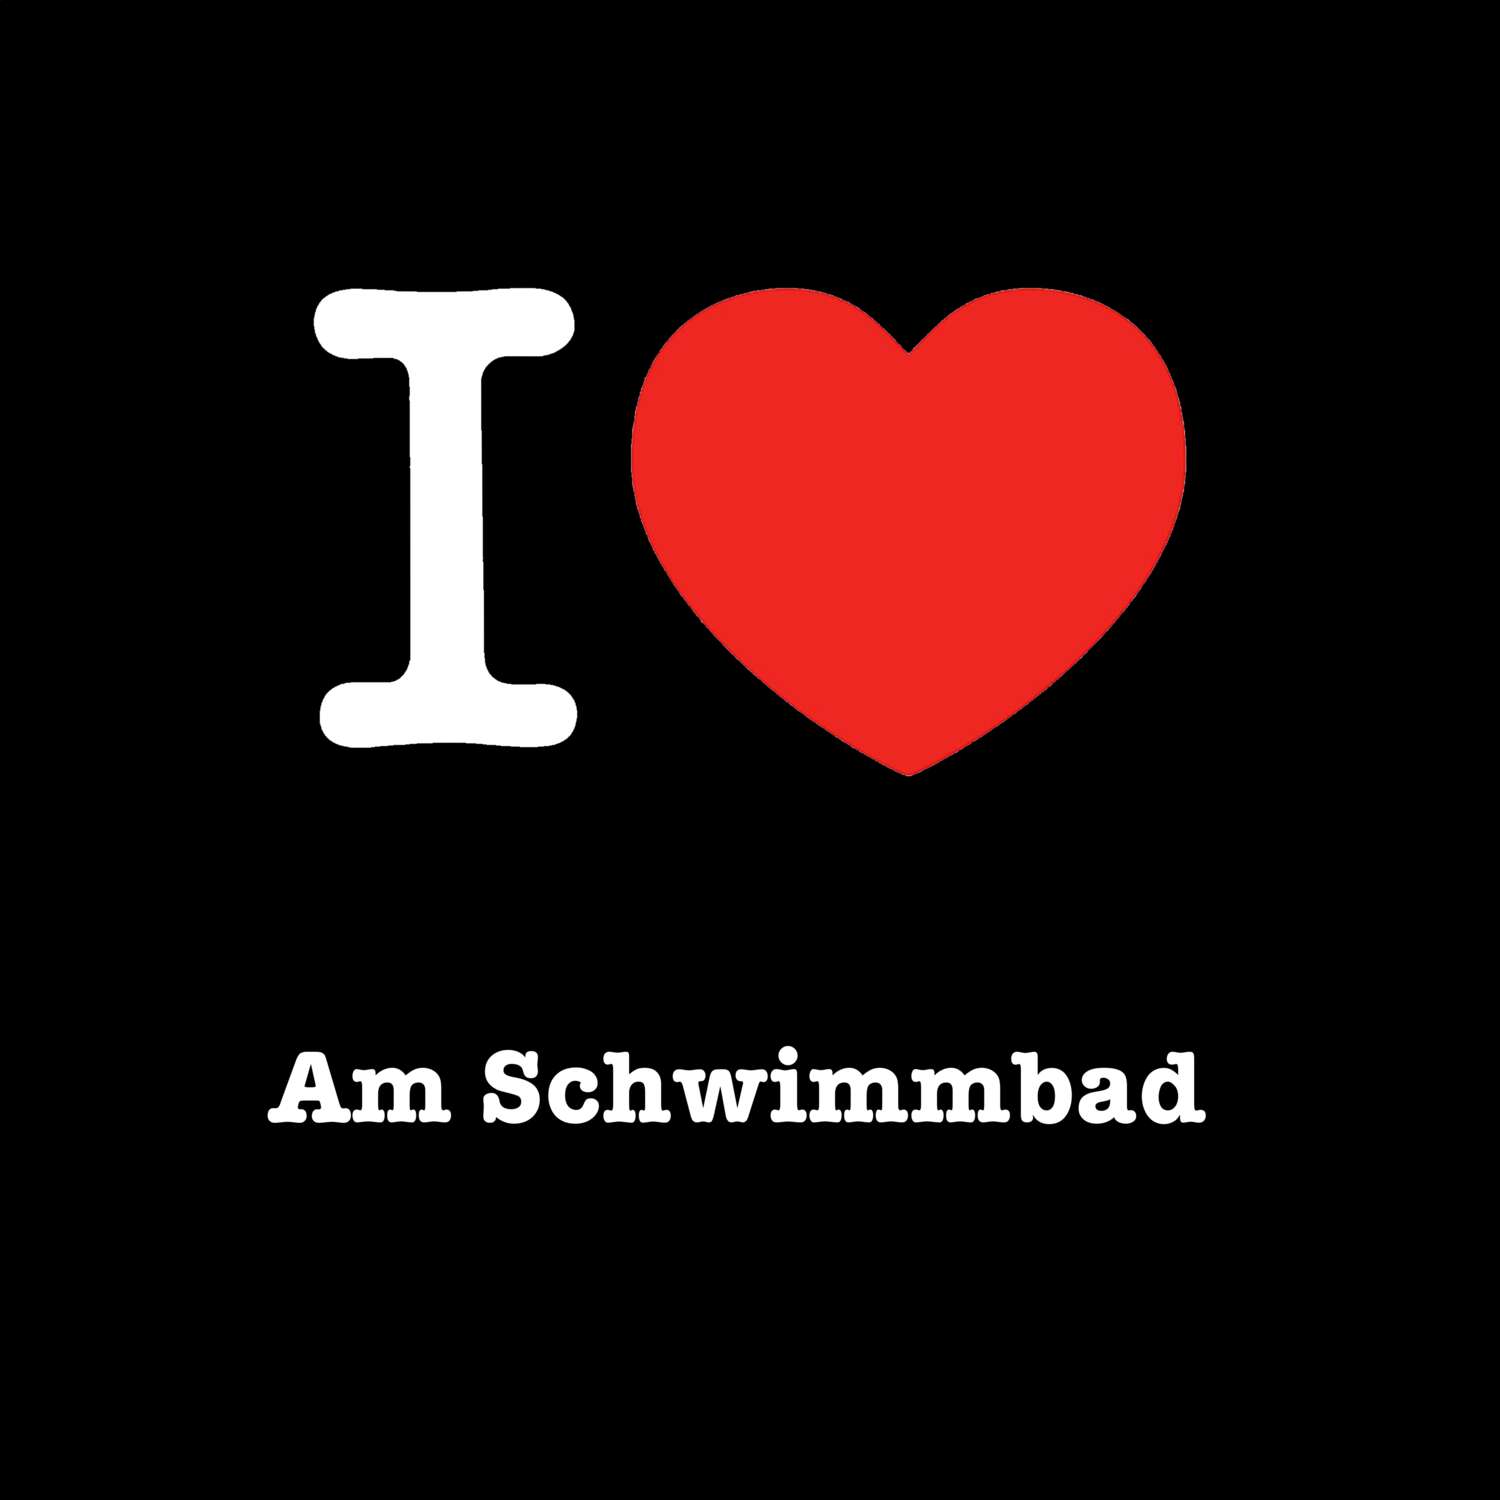 Am Schwimmbad T-Shirt »I love«